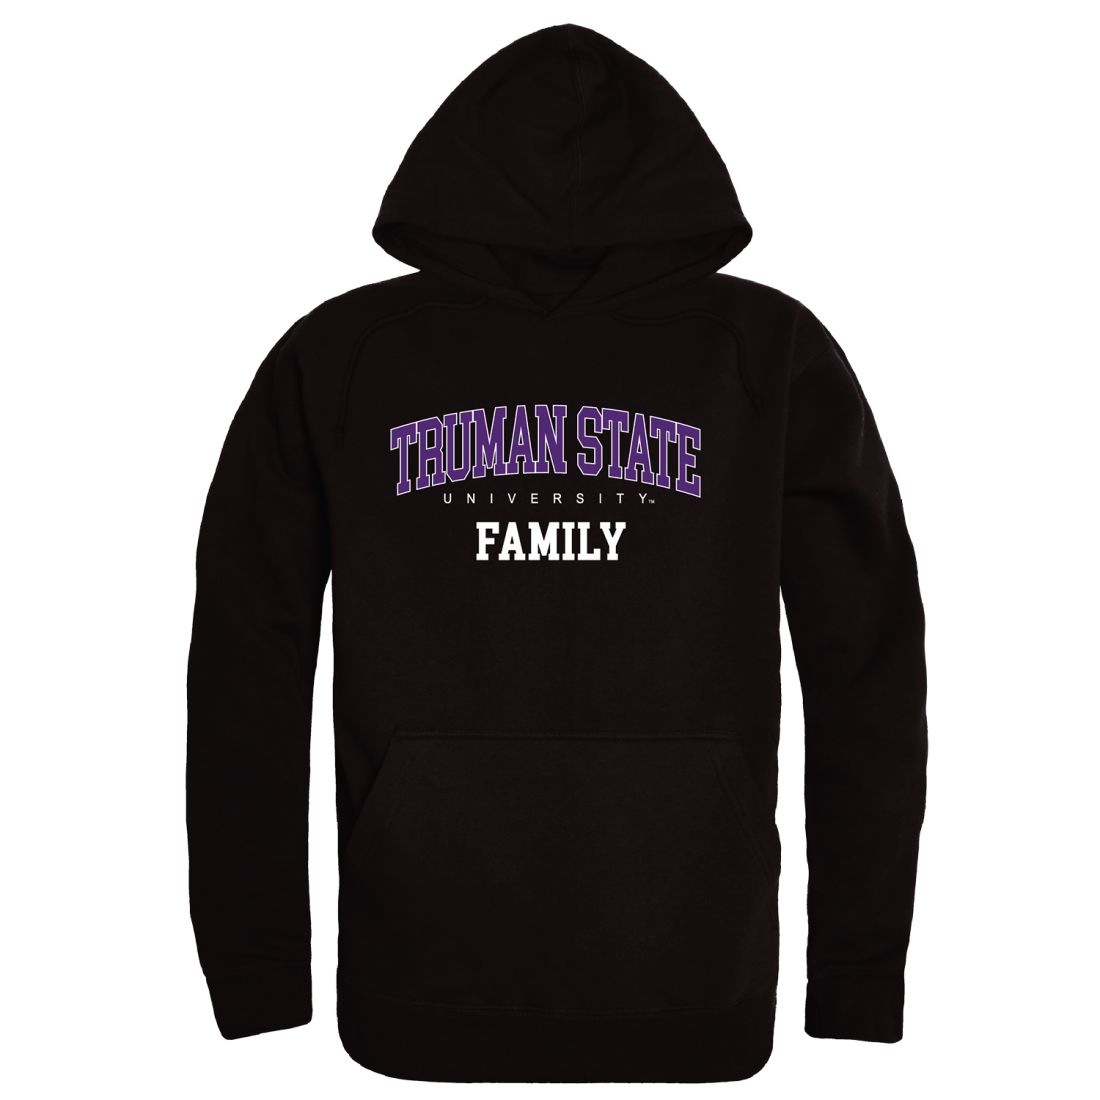 Truman State University Bulldogs Family Hoodie Sweatshirts